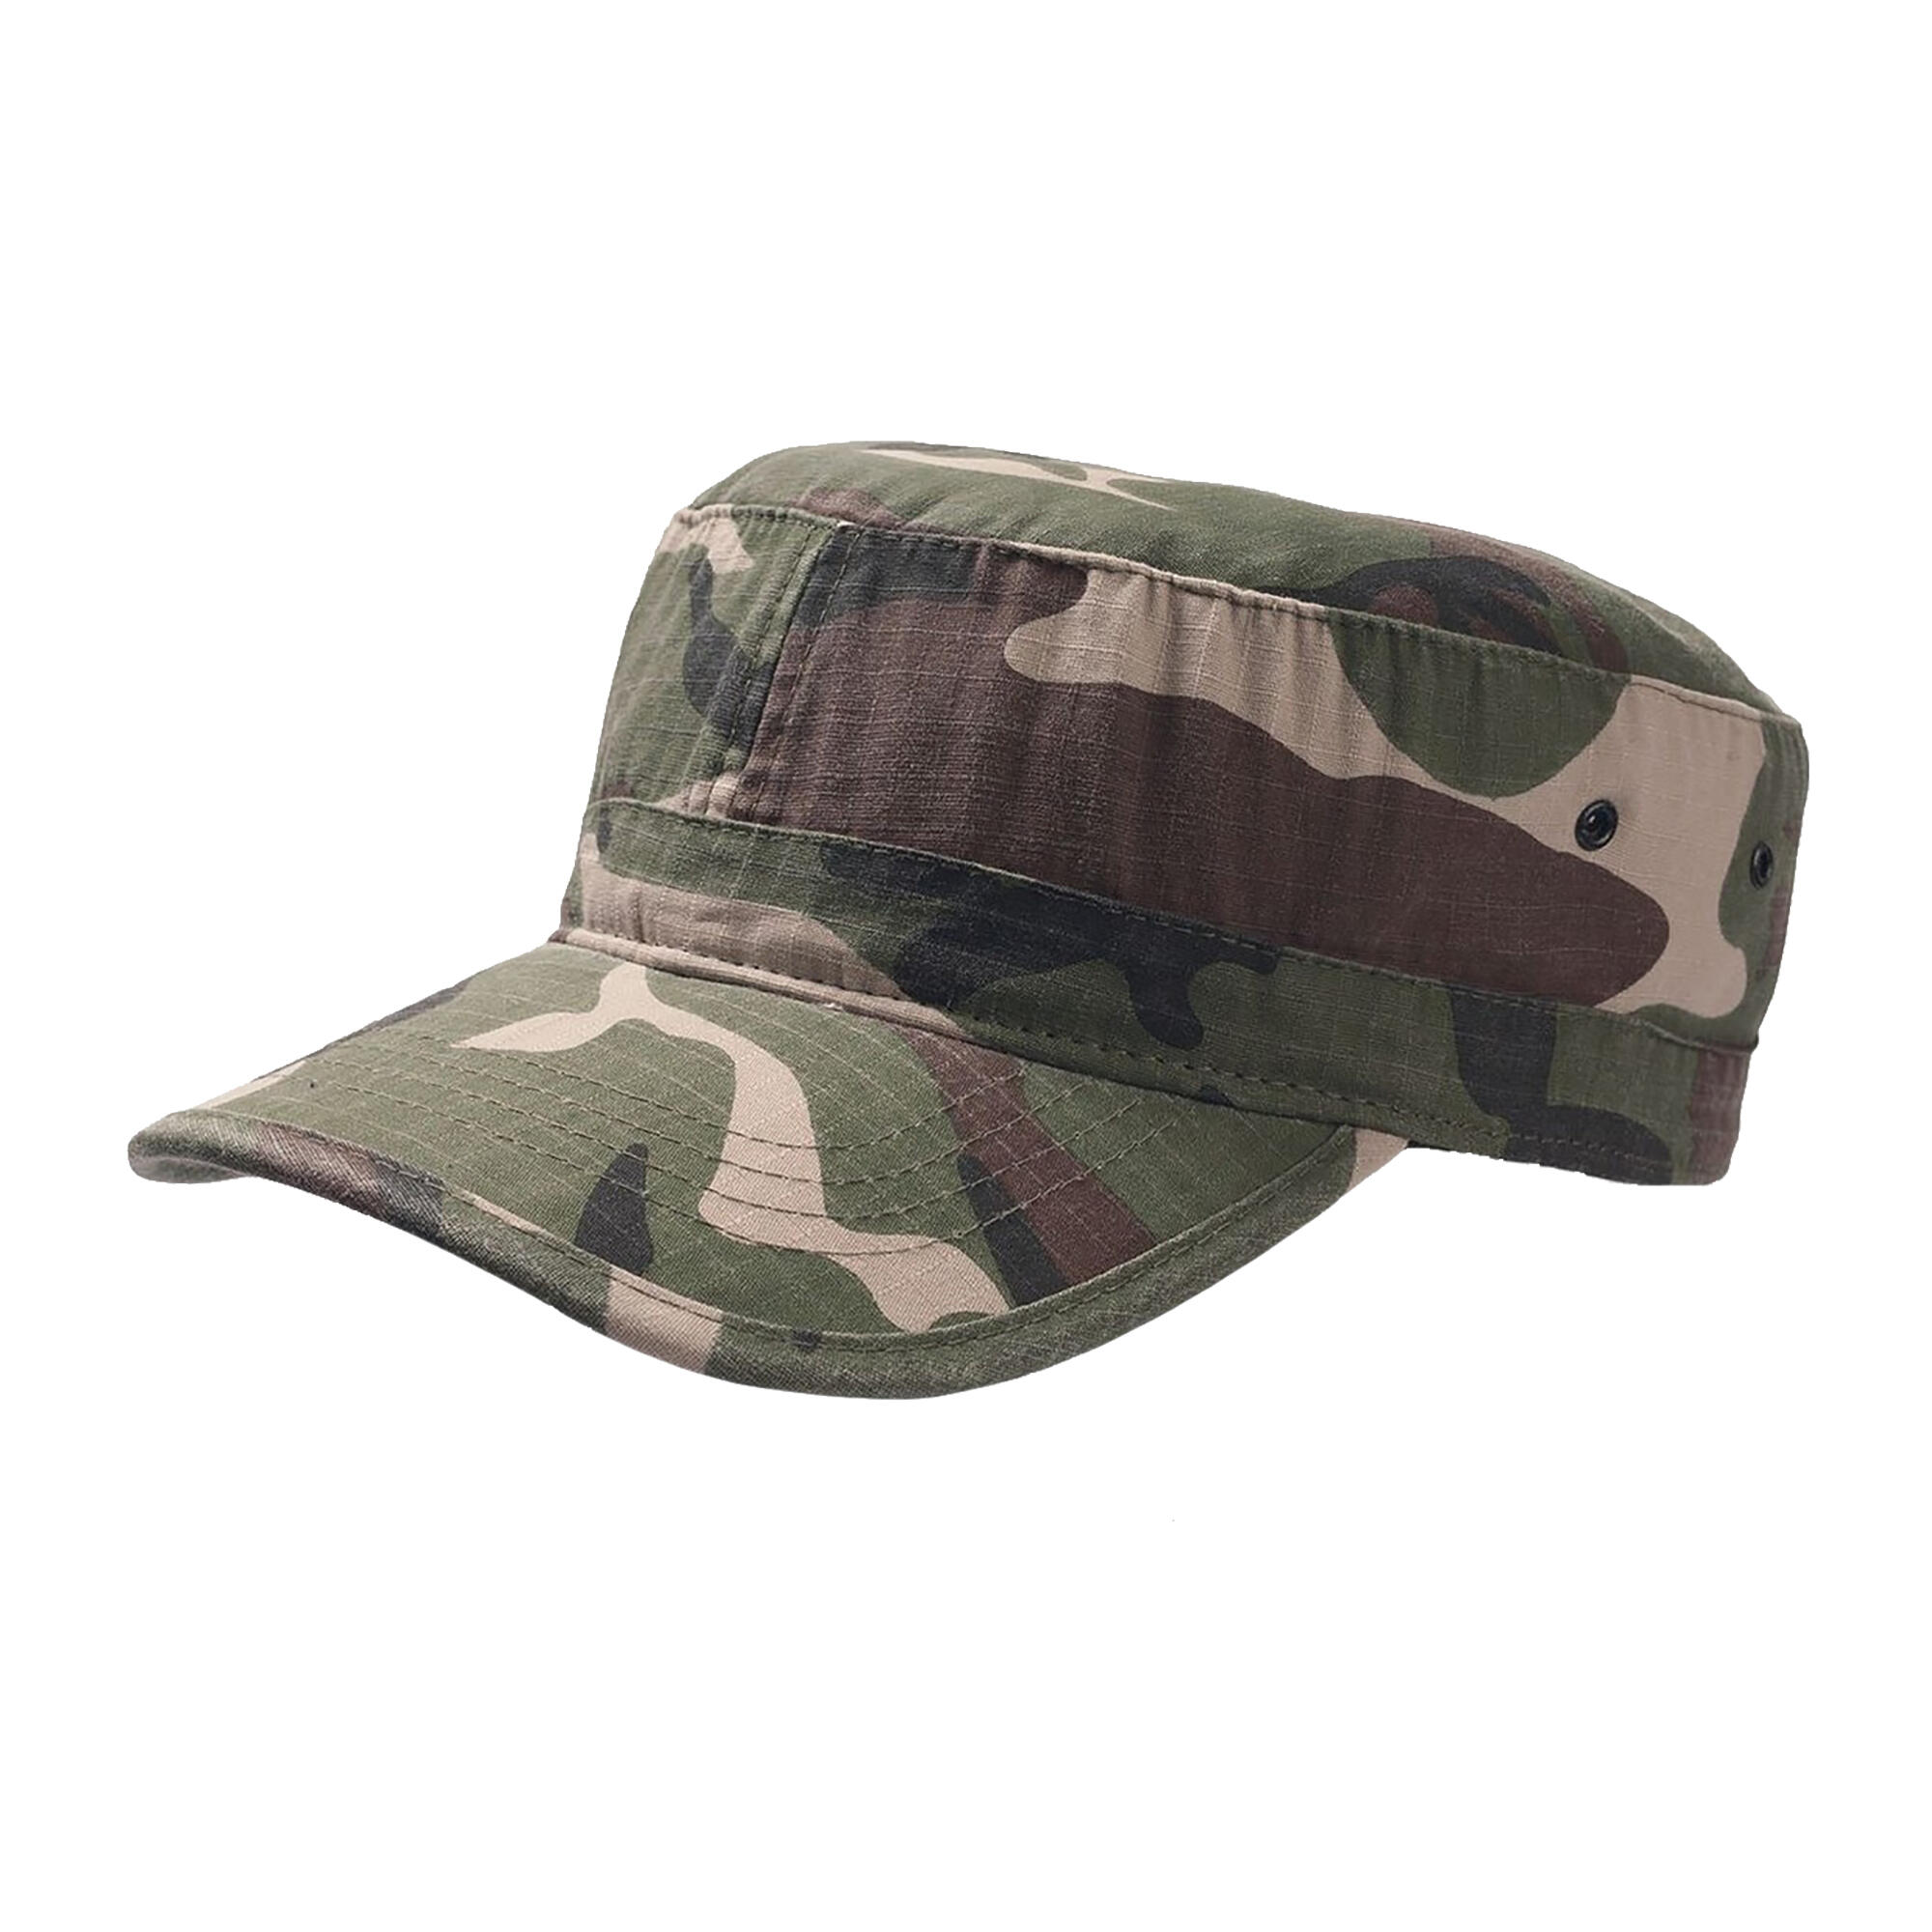 ATLANTIS Army Military Cap (Camouflage)